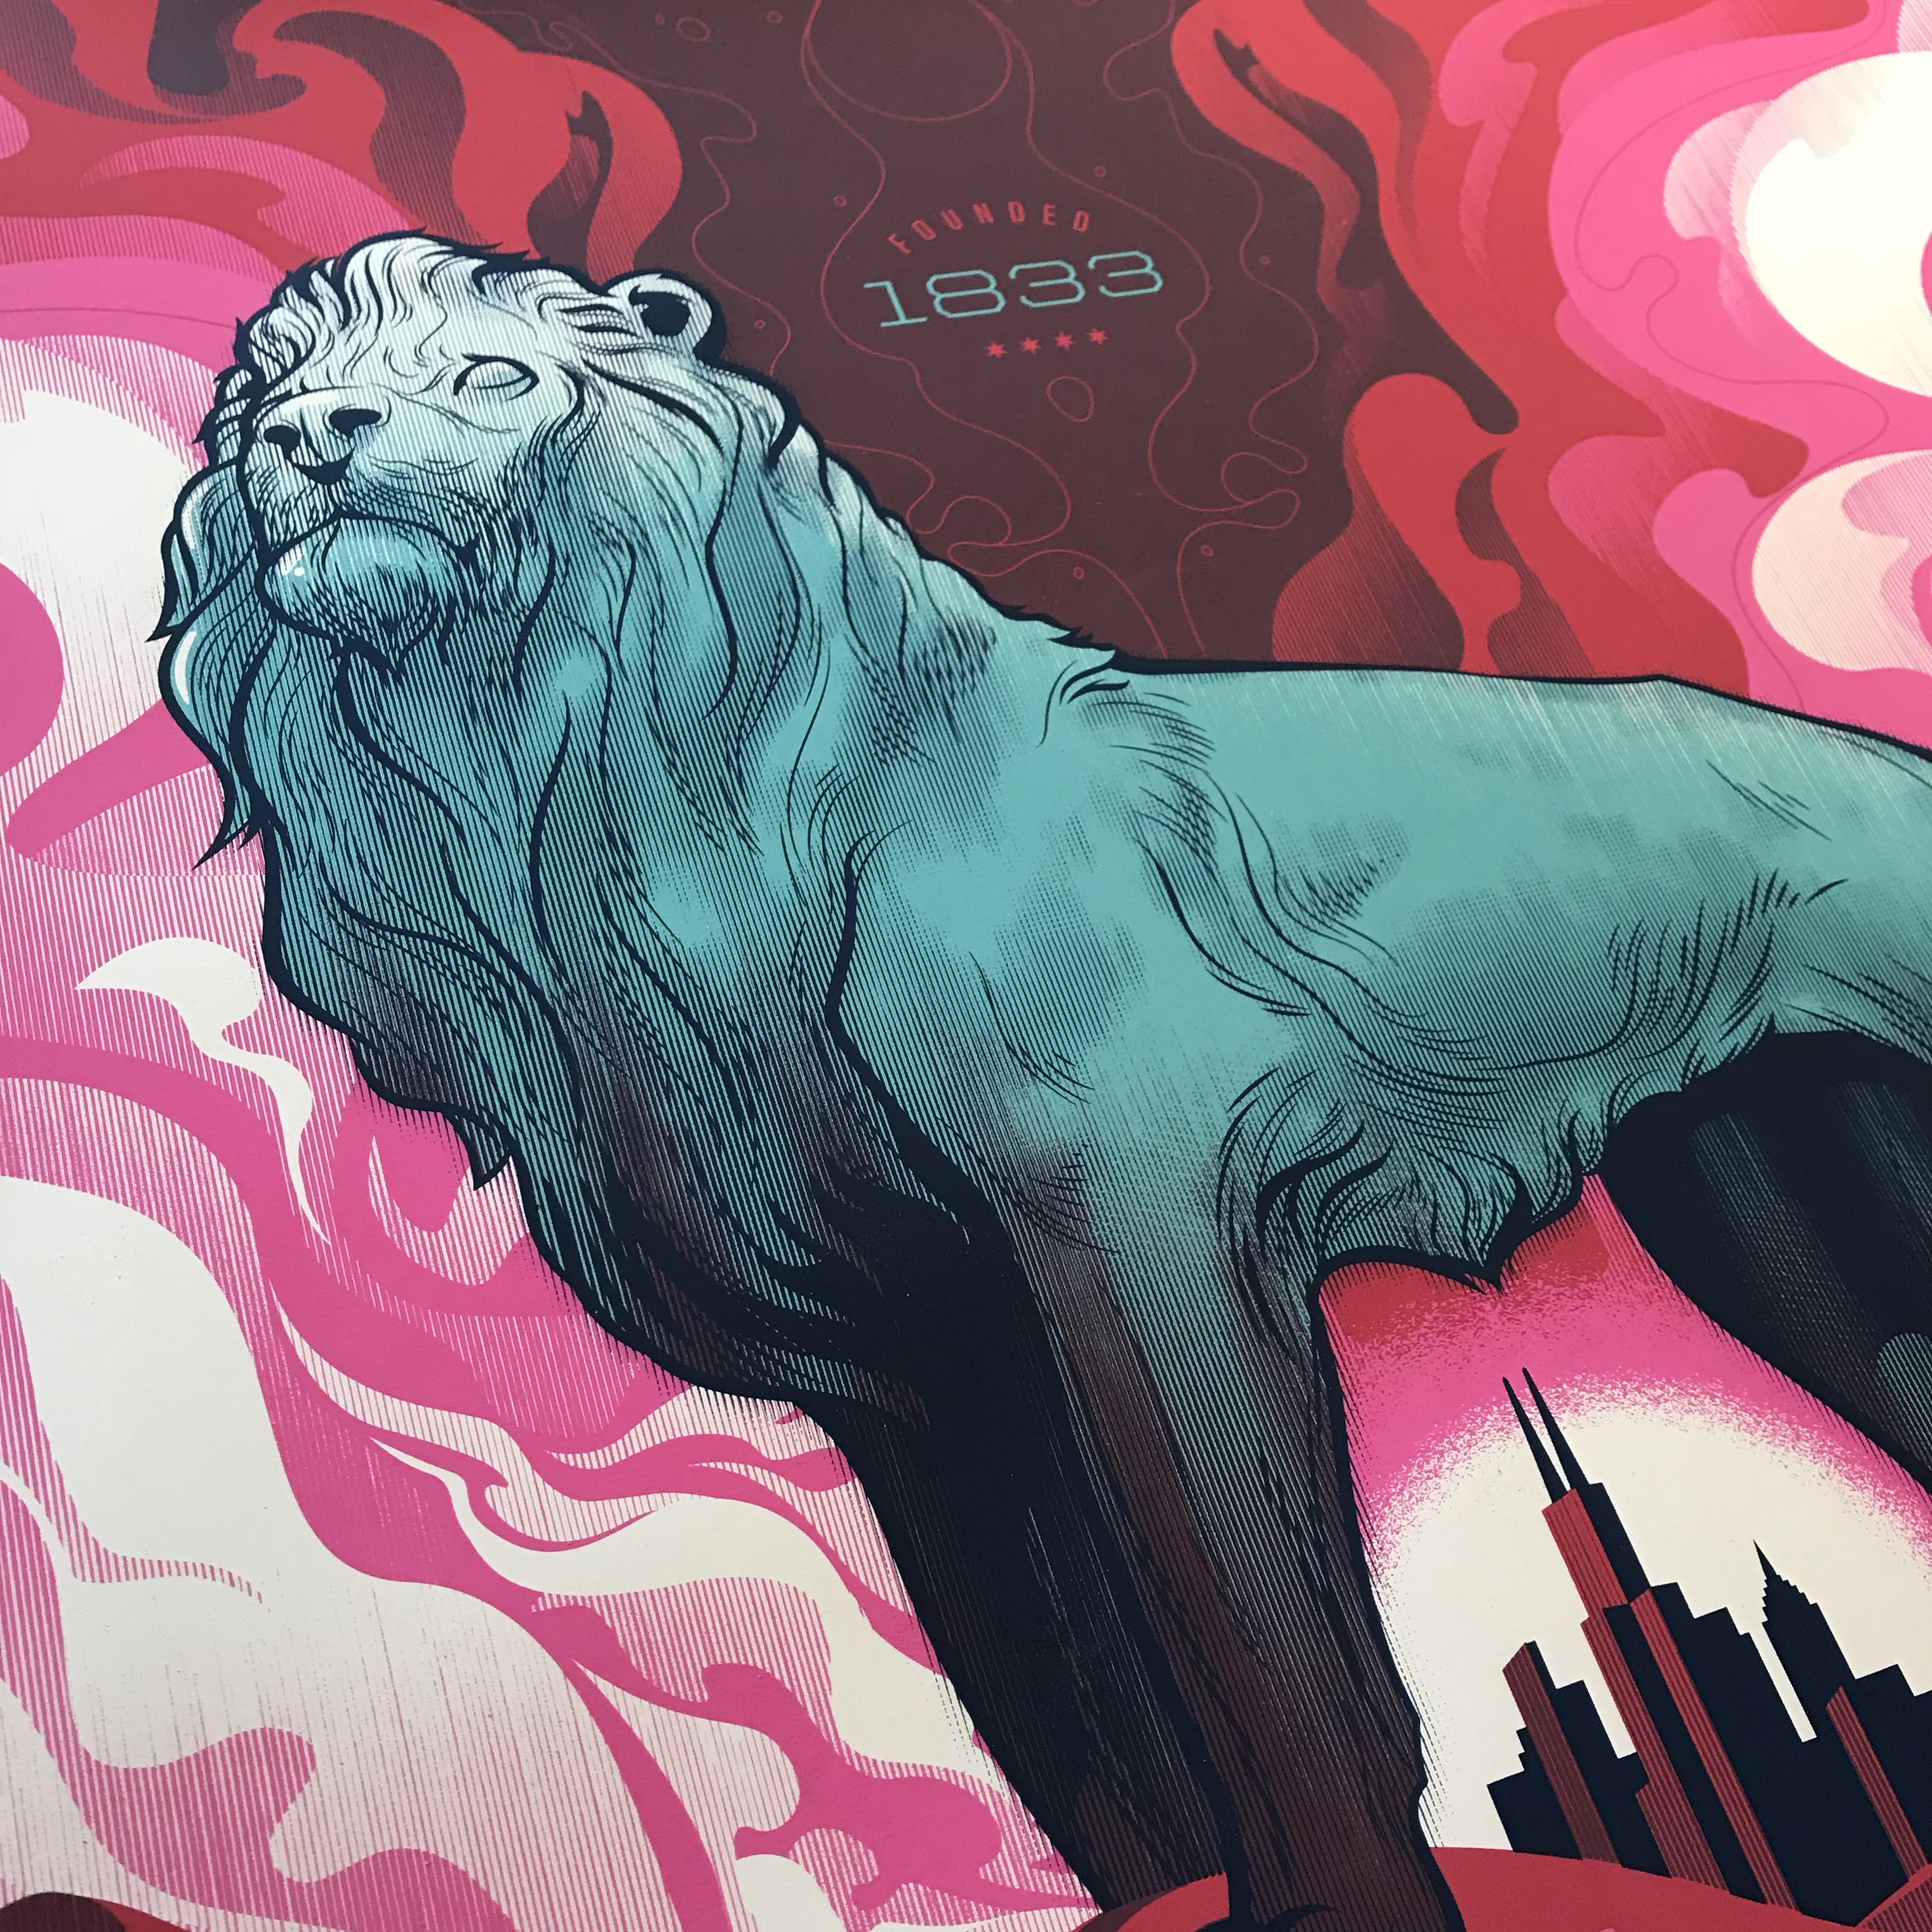 Chicago Bronze Lion Poster